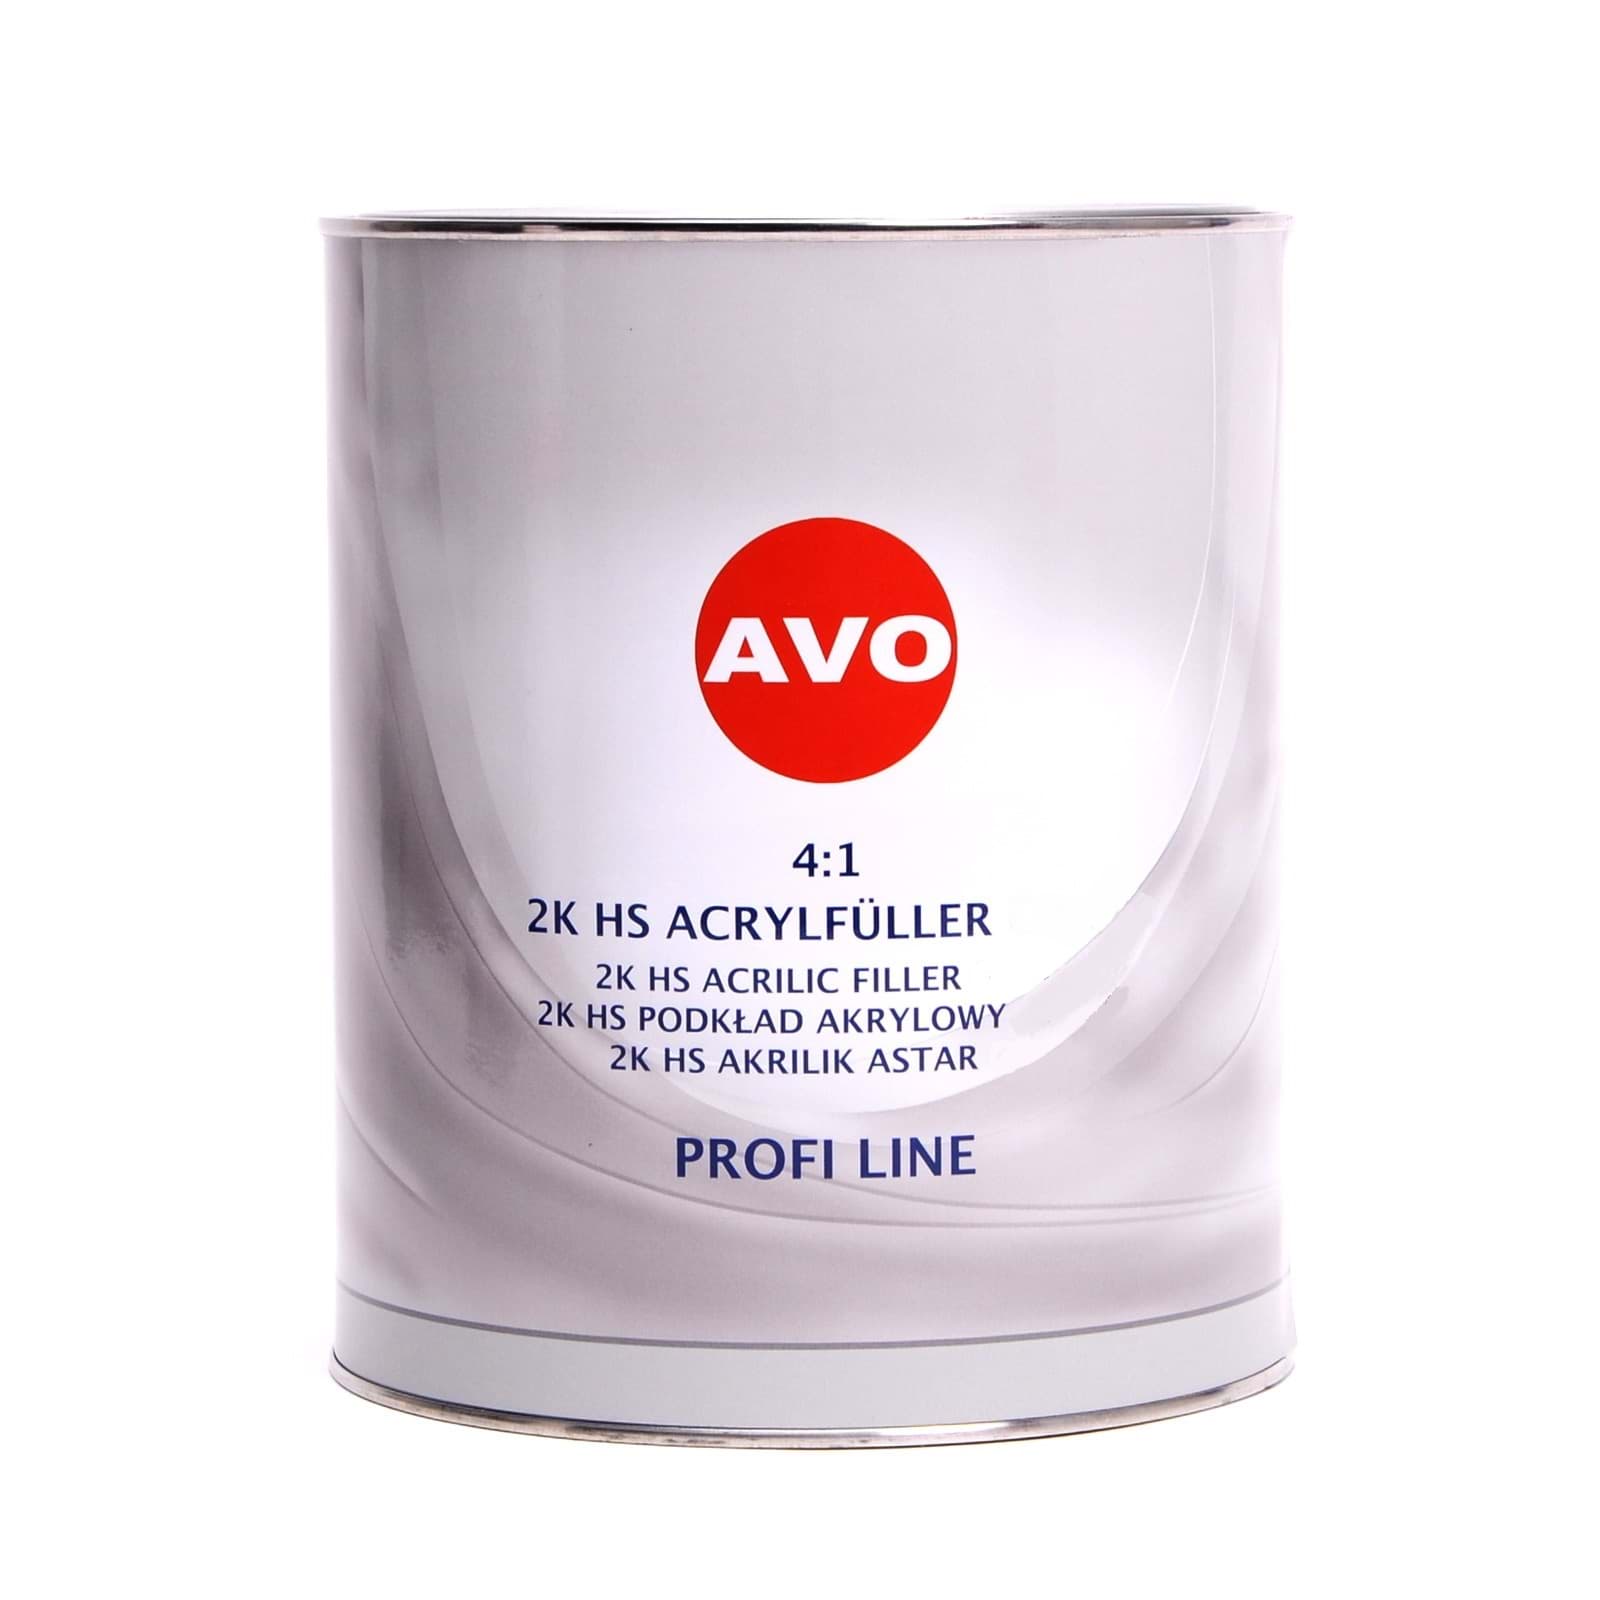 AVO 2K HS 4:1 Grundier Füller  Acrylfiller grau 4 Liter resmi